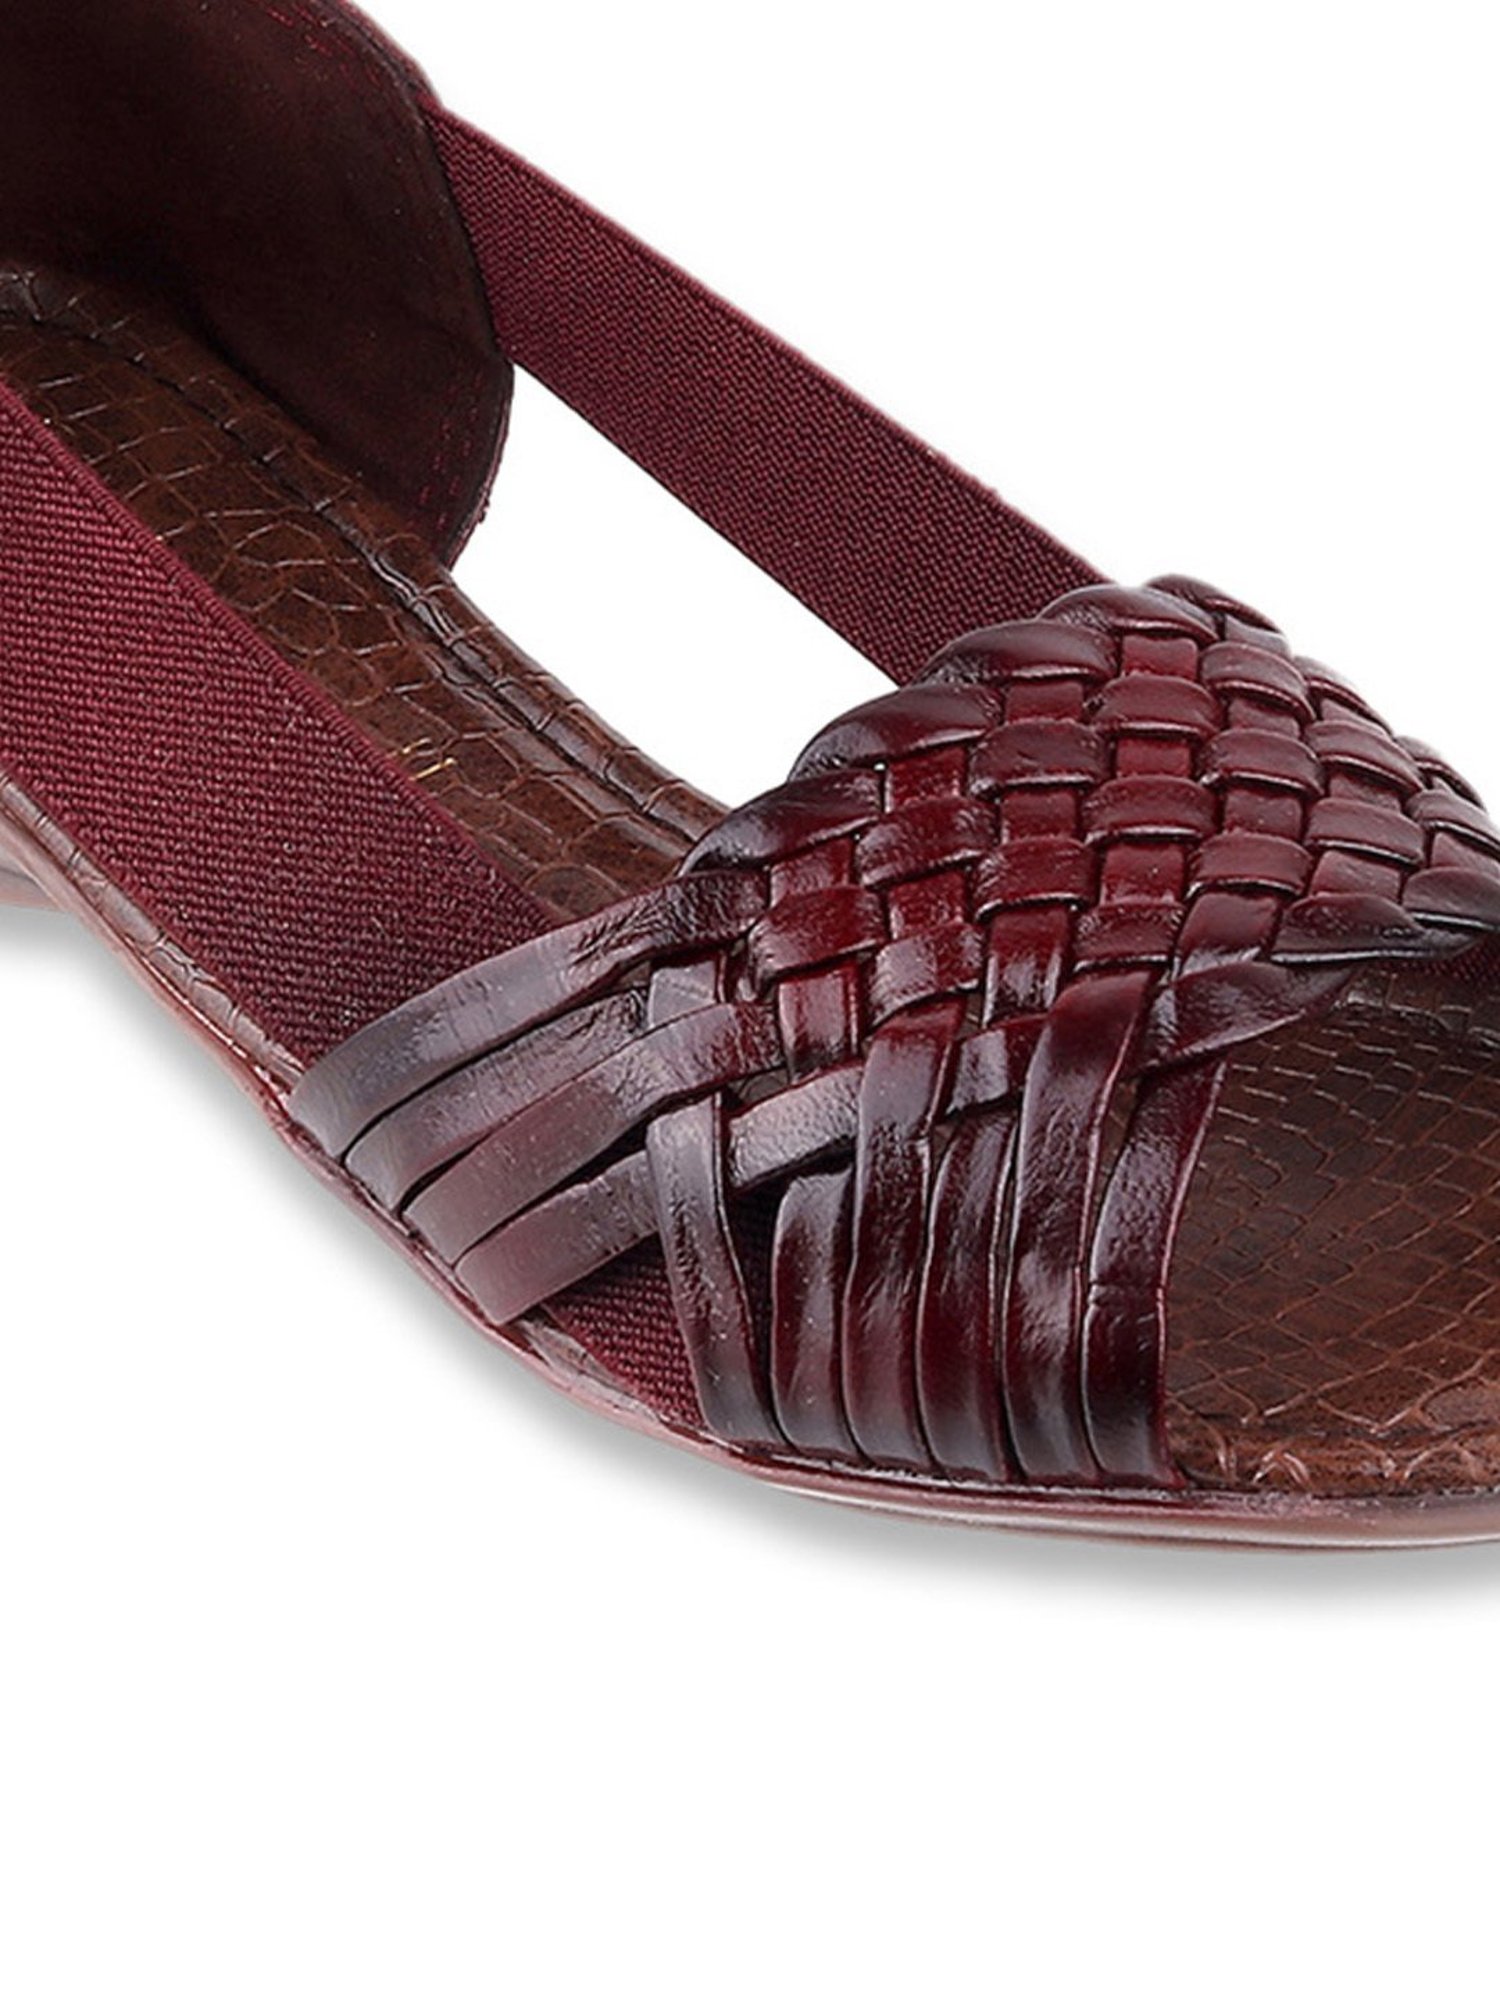 Flats & Sandals | Catwalk Wedges Size 36 | Freeup